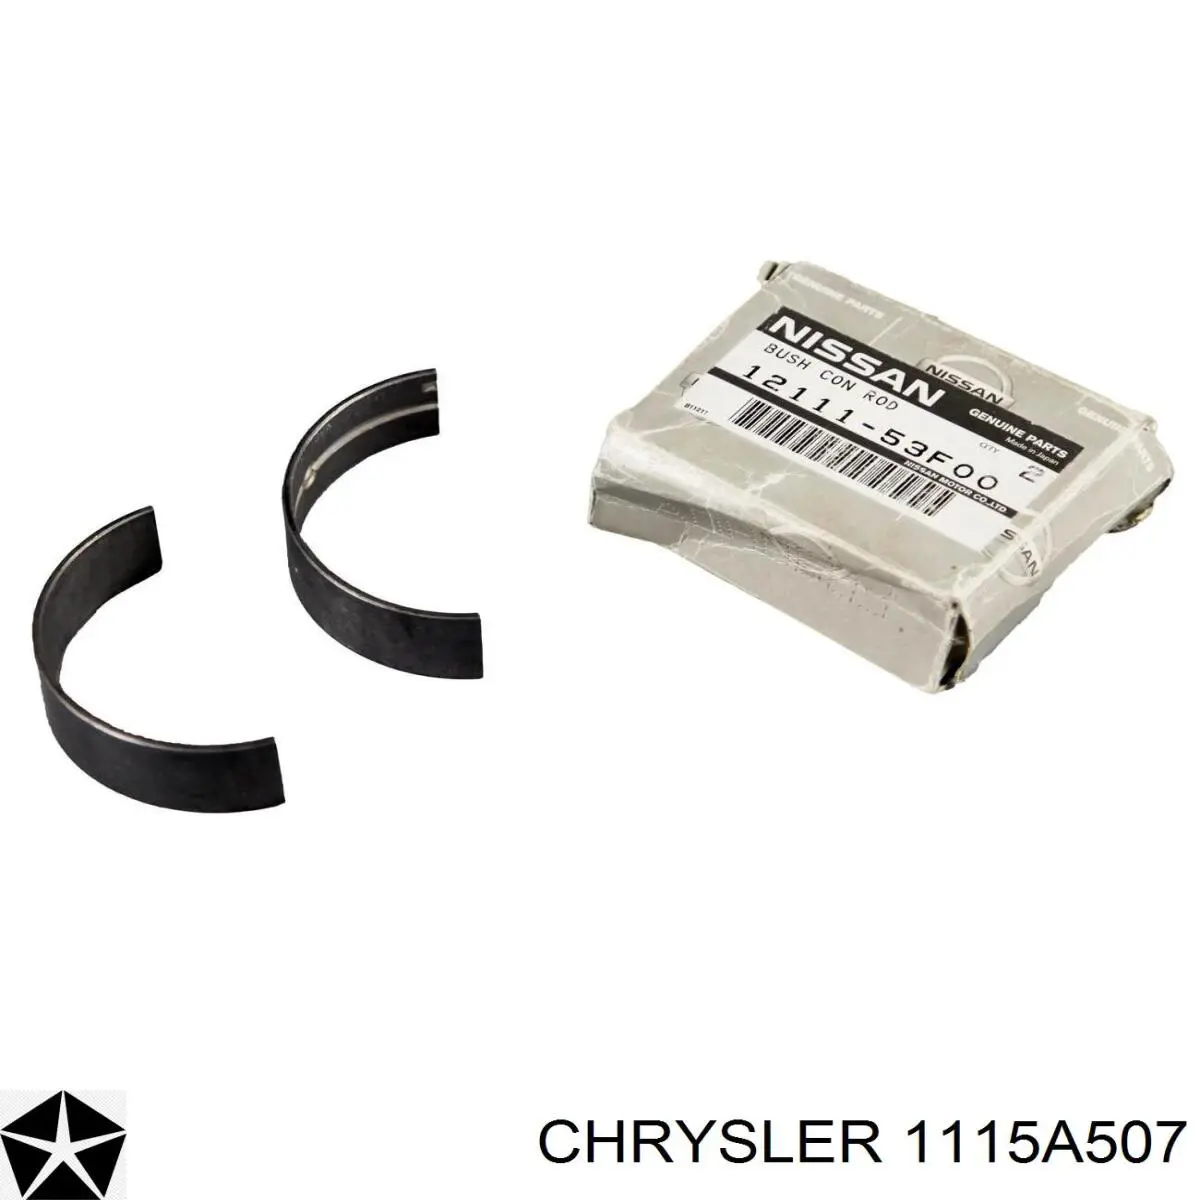 1115A507 Chrysler вкладыши коленвала шатунные, комплект, стандарт (std)